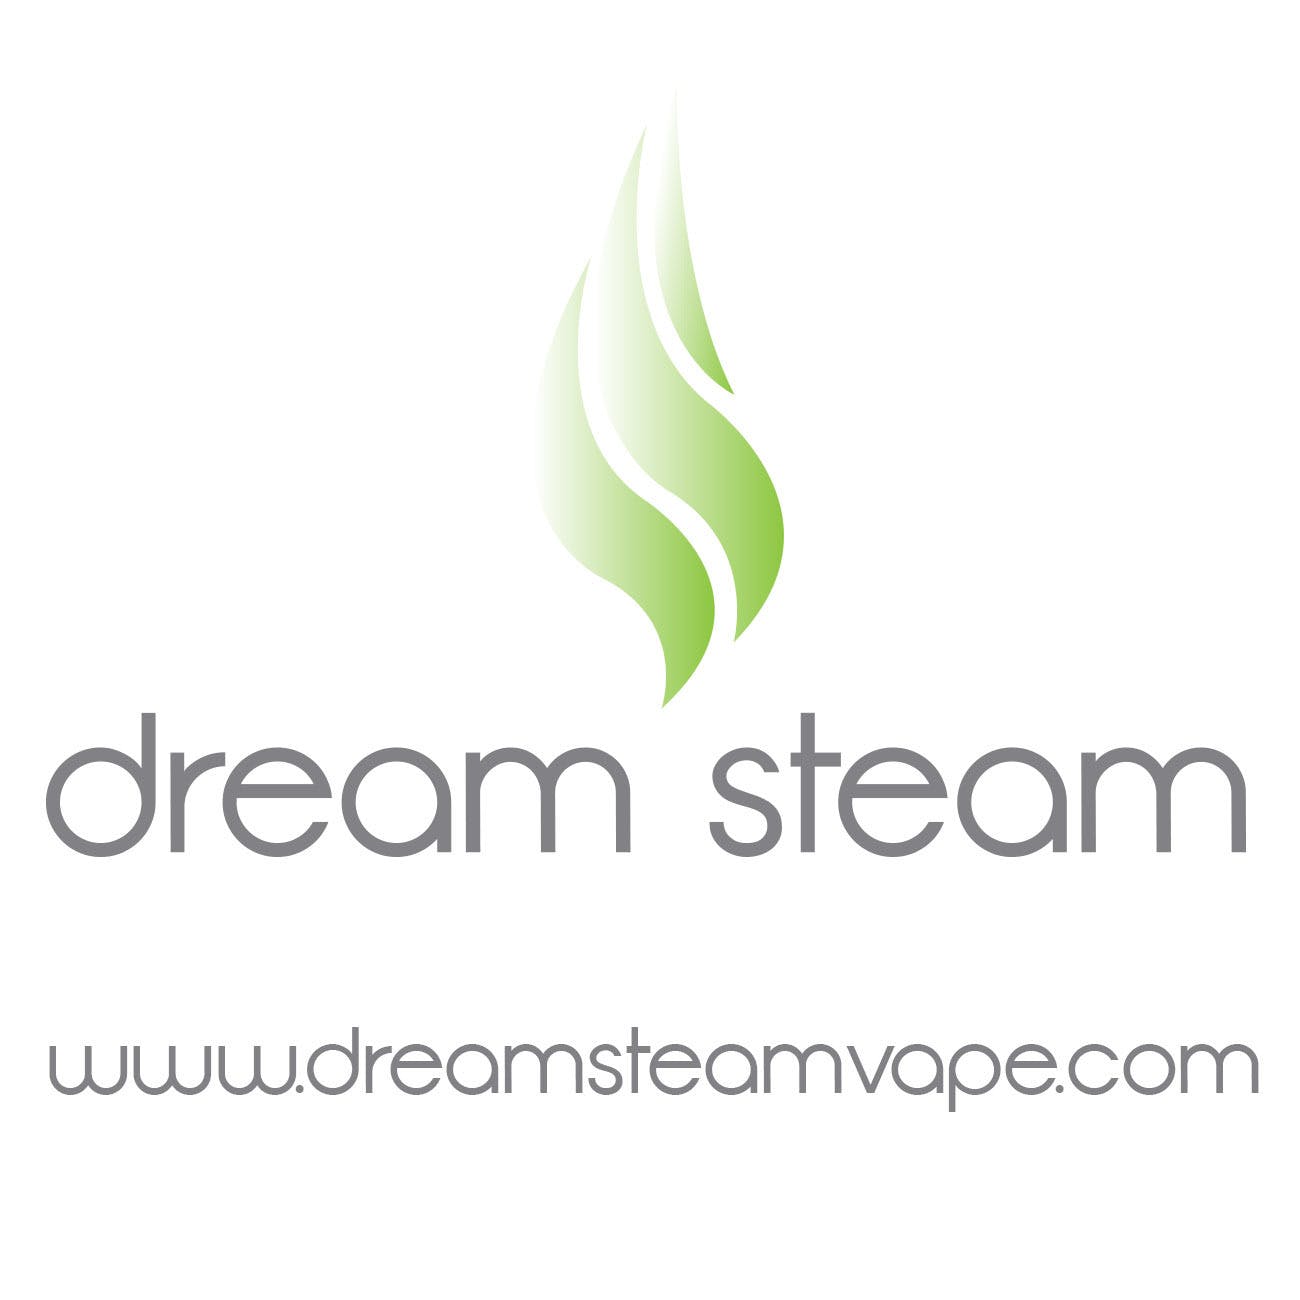 Dream Steam Tru Terps: Fire OG